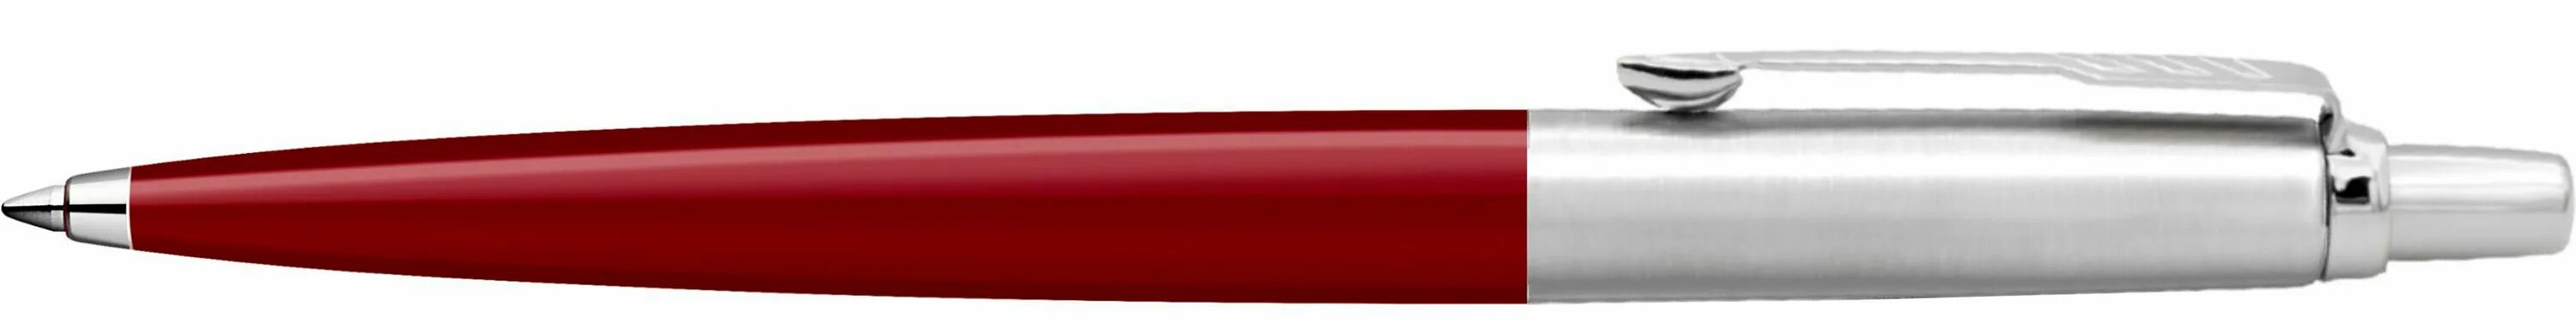 Utech hitre 500. Шариковая ручка Parker Jotter k60, Red CT. Ручка Паркер красная r0033330 535. Parker Jotter бордовый. Шариковая ручка Parker Jotter k60, s0033330 цвет: Red (№ 520).